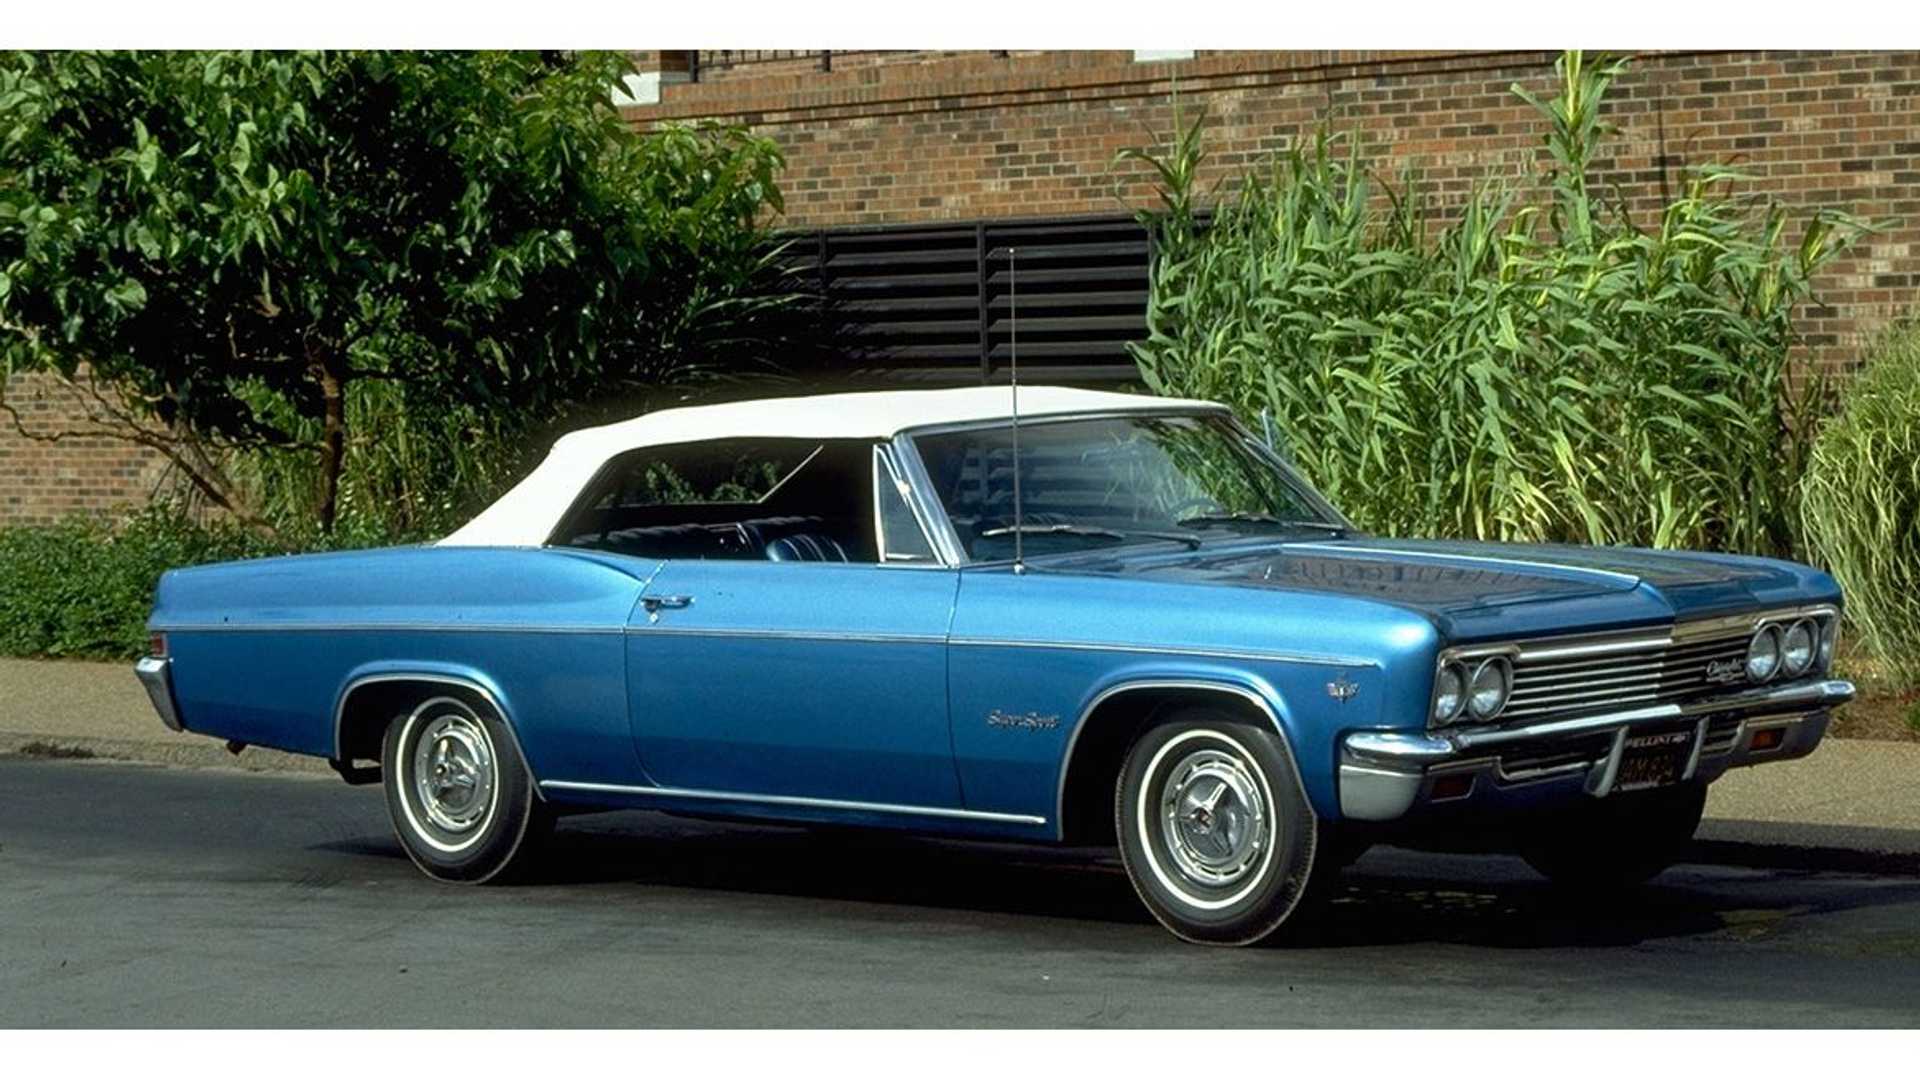 Chevrolet impala год. Chevrolet Impala 1966. Шевроле Импала супер спорт 1967. Chevrolet Impala 70. Chevrolet Impala 1967 Sport.